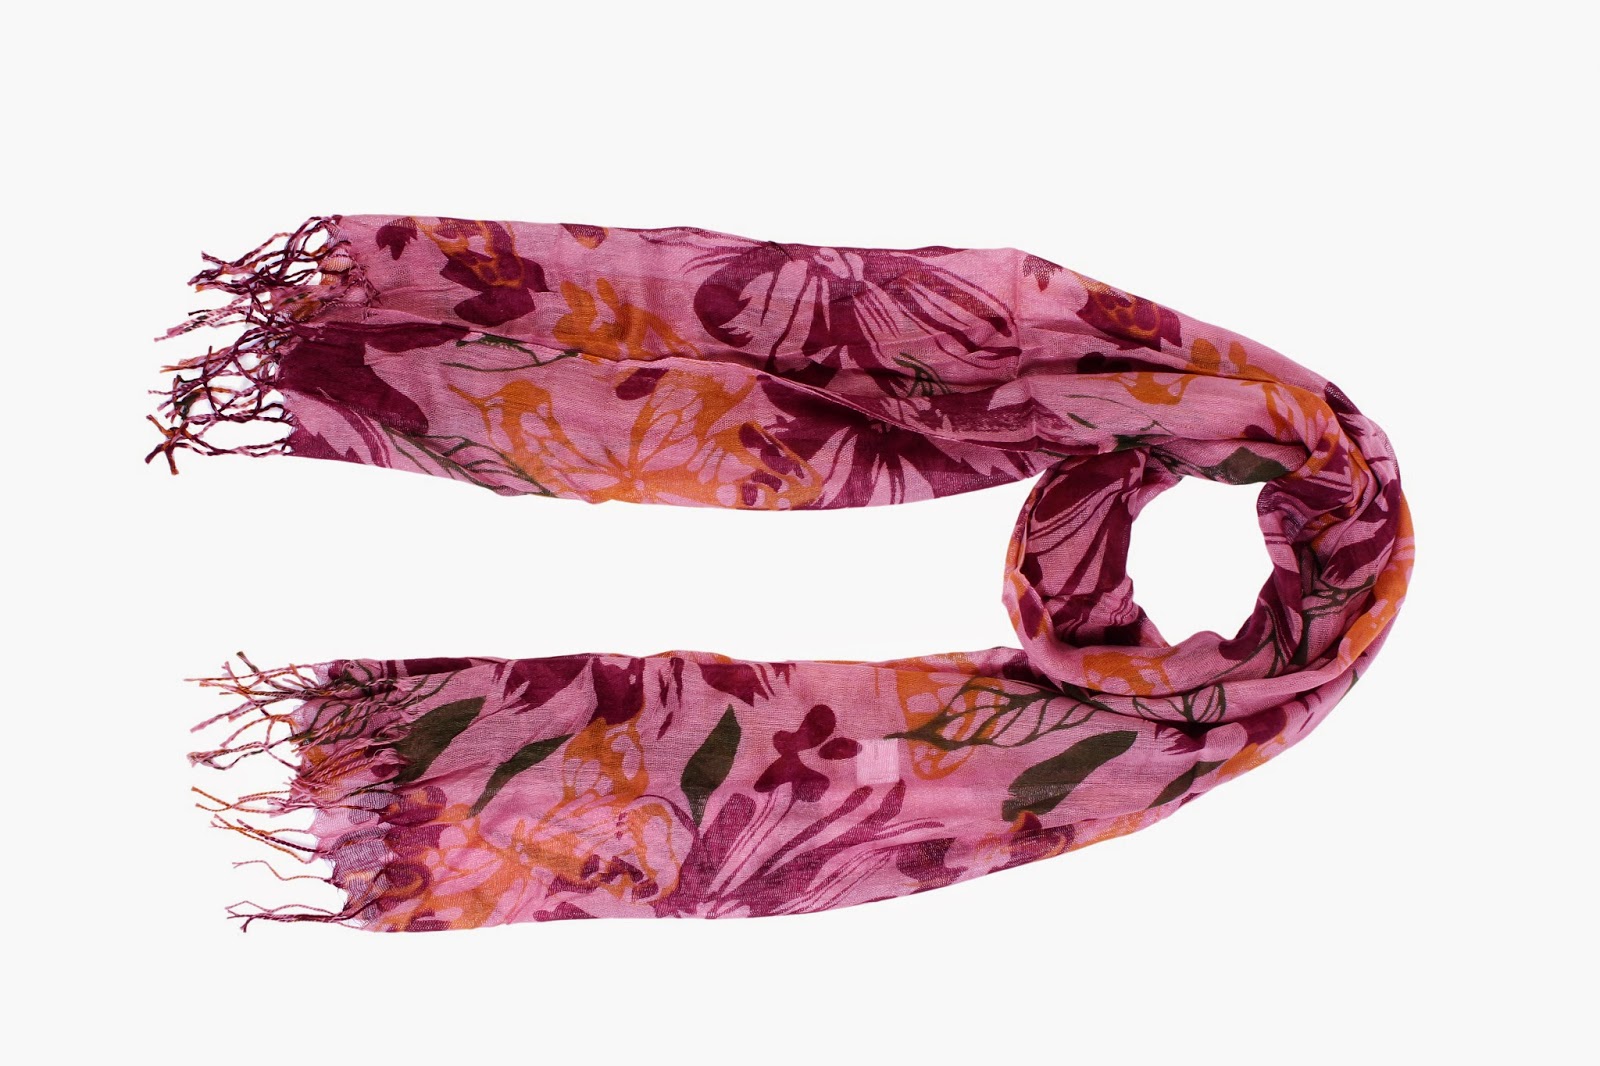  imagen pañuelo foulard pashmina para regalo